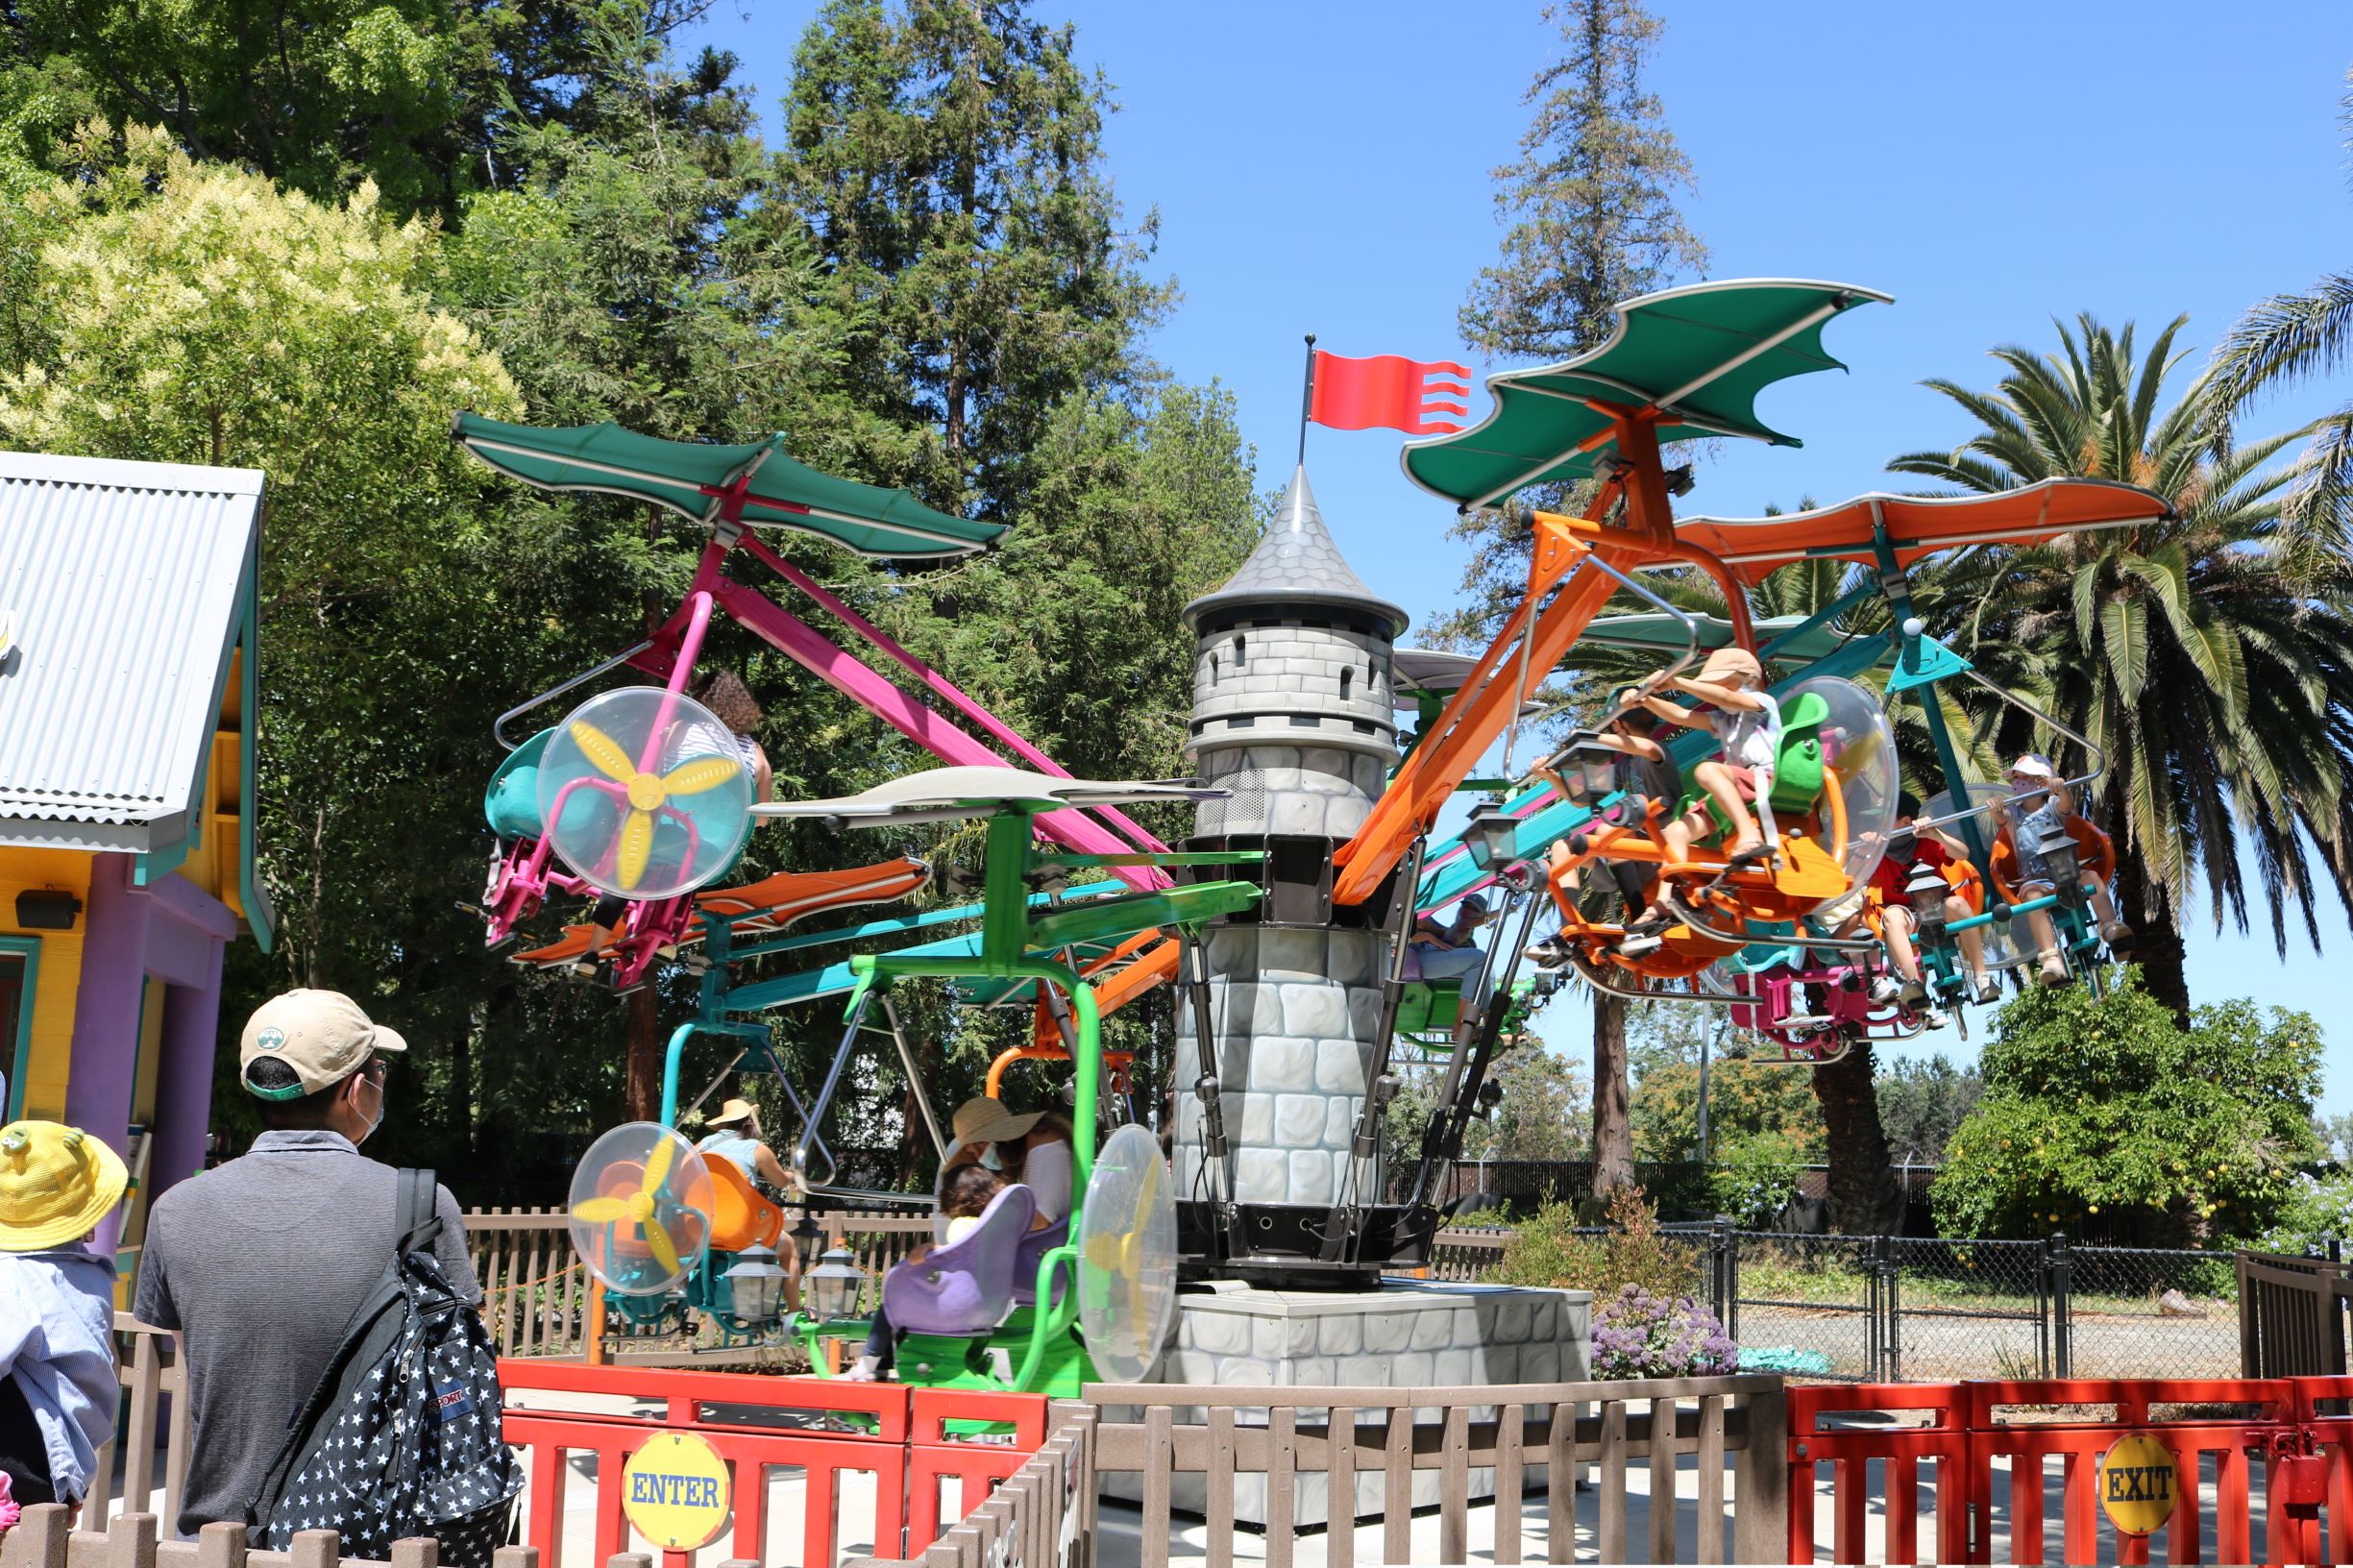 Happy Hollow Park & Zoo of San Jose